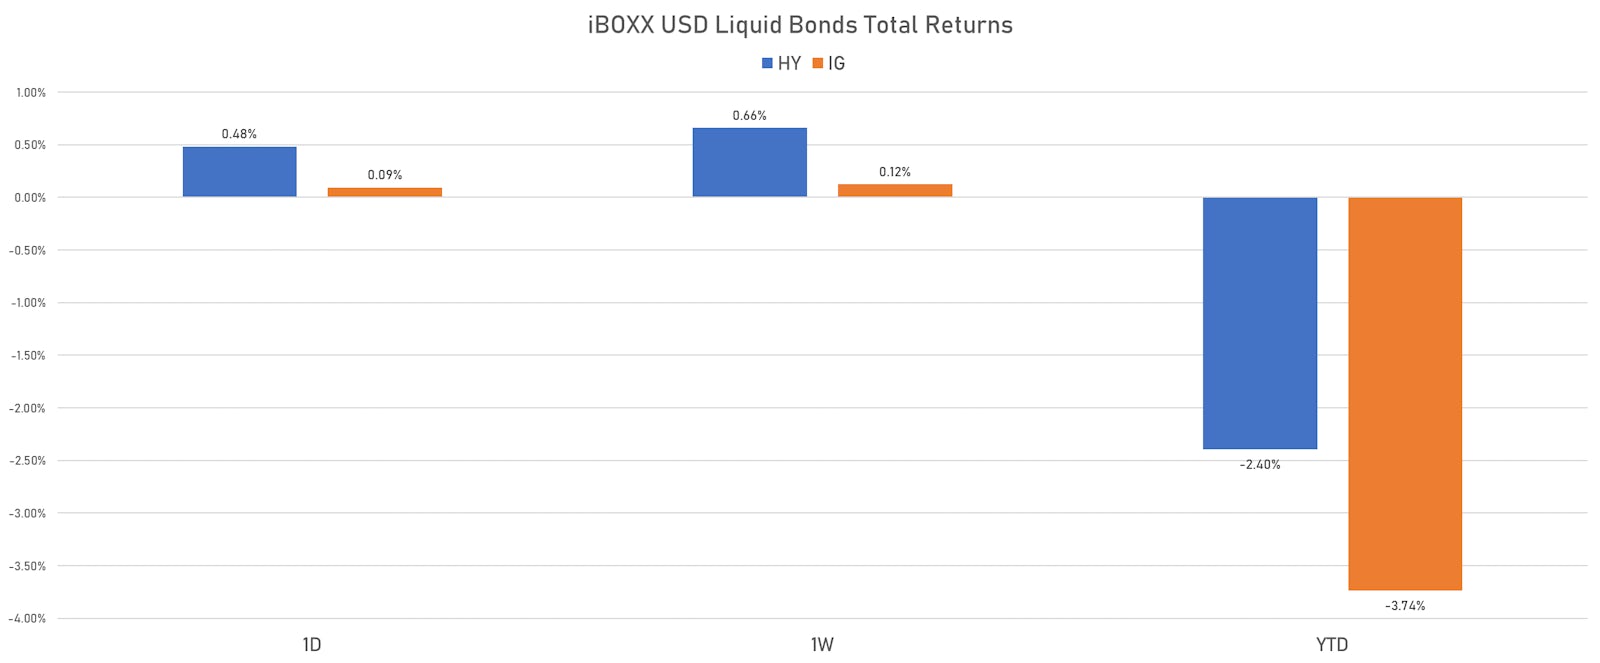 iBOXX USD Liquid Bonds Total Returns For IG & HY | Sources: ϕpost, Refinitiv data